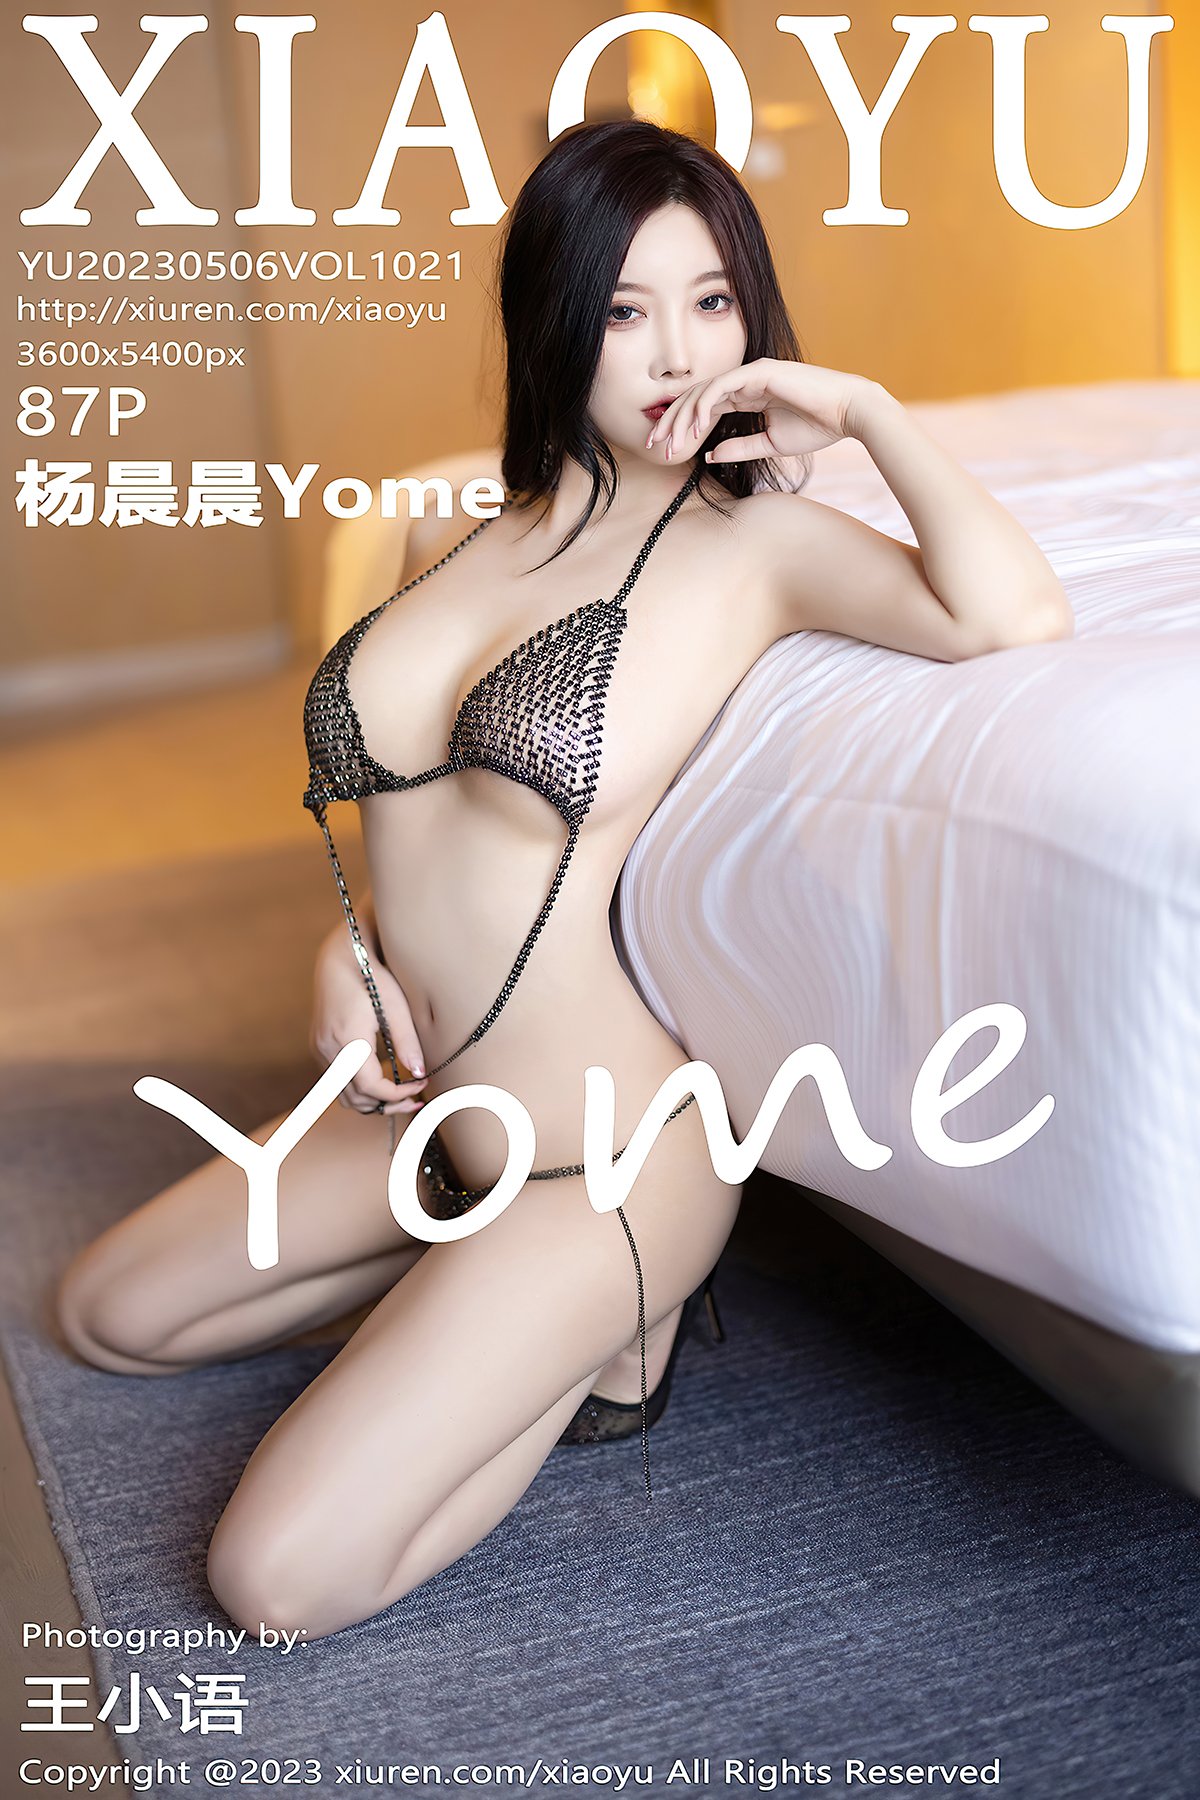 XiaoYu语画界 Vol.1021 Yang Chen Chen Yome